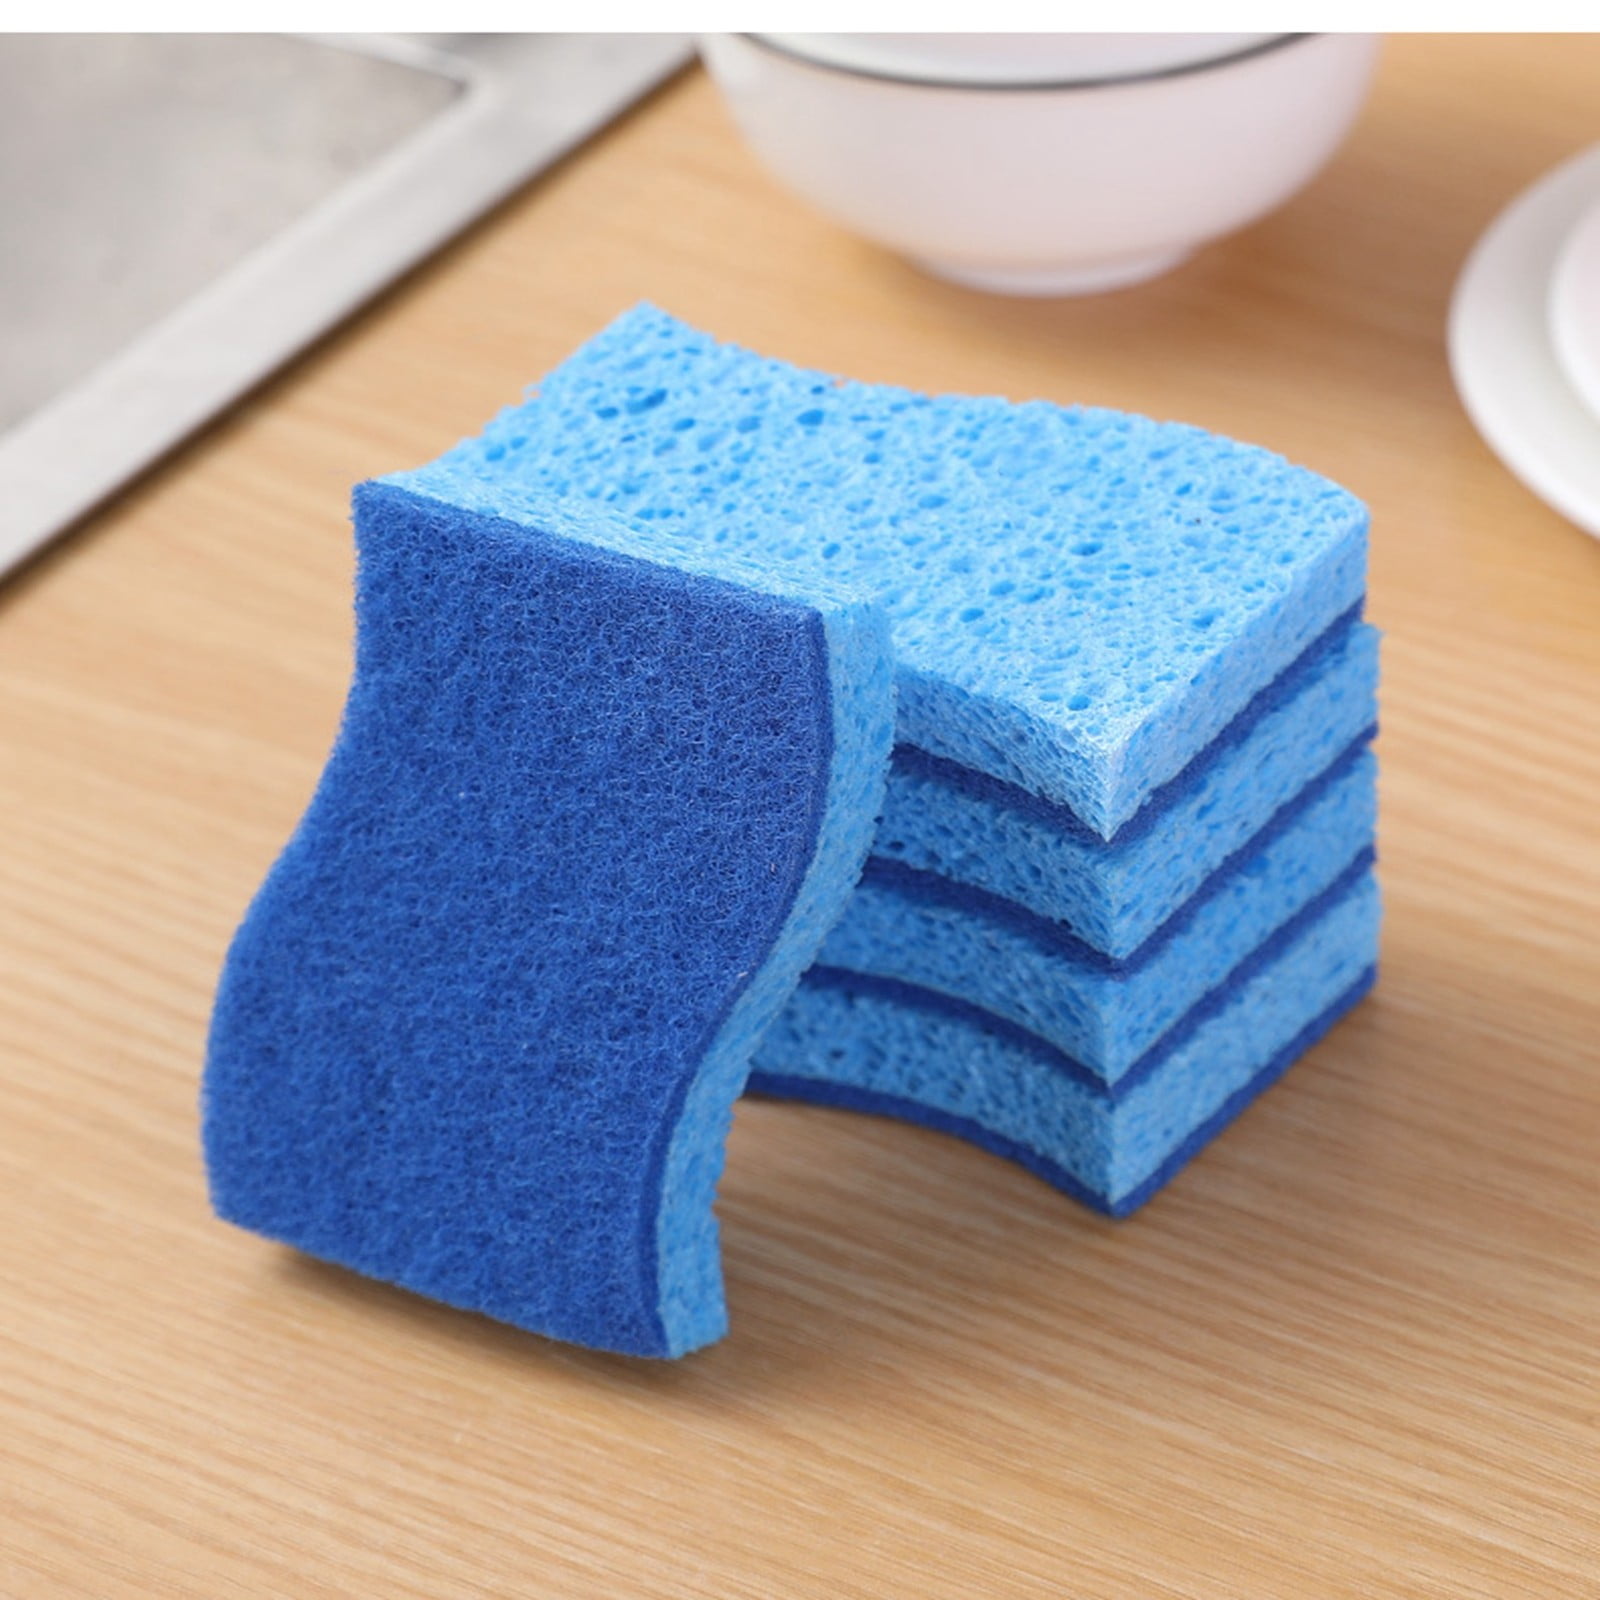 Miracle Microfiber Kitchen Sponge by Scrub-It - Non-Scratch Heavy